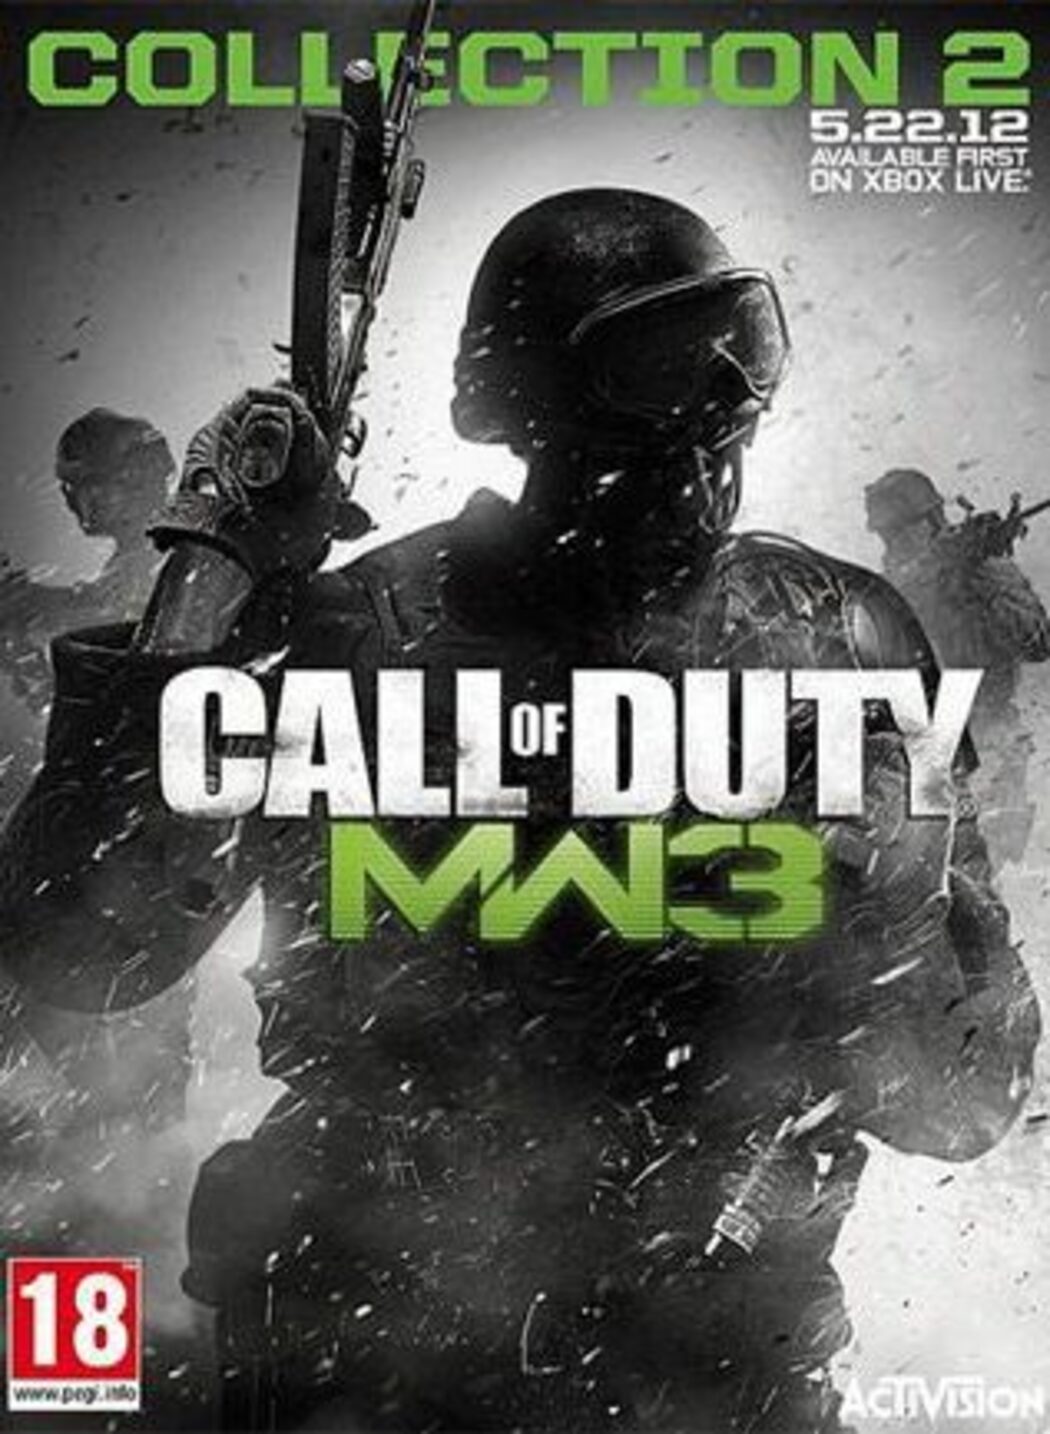 Buy Call of Duty®: Modern Warfare® 3 Collection 1 Steam Key